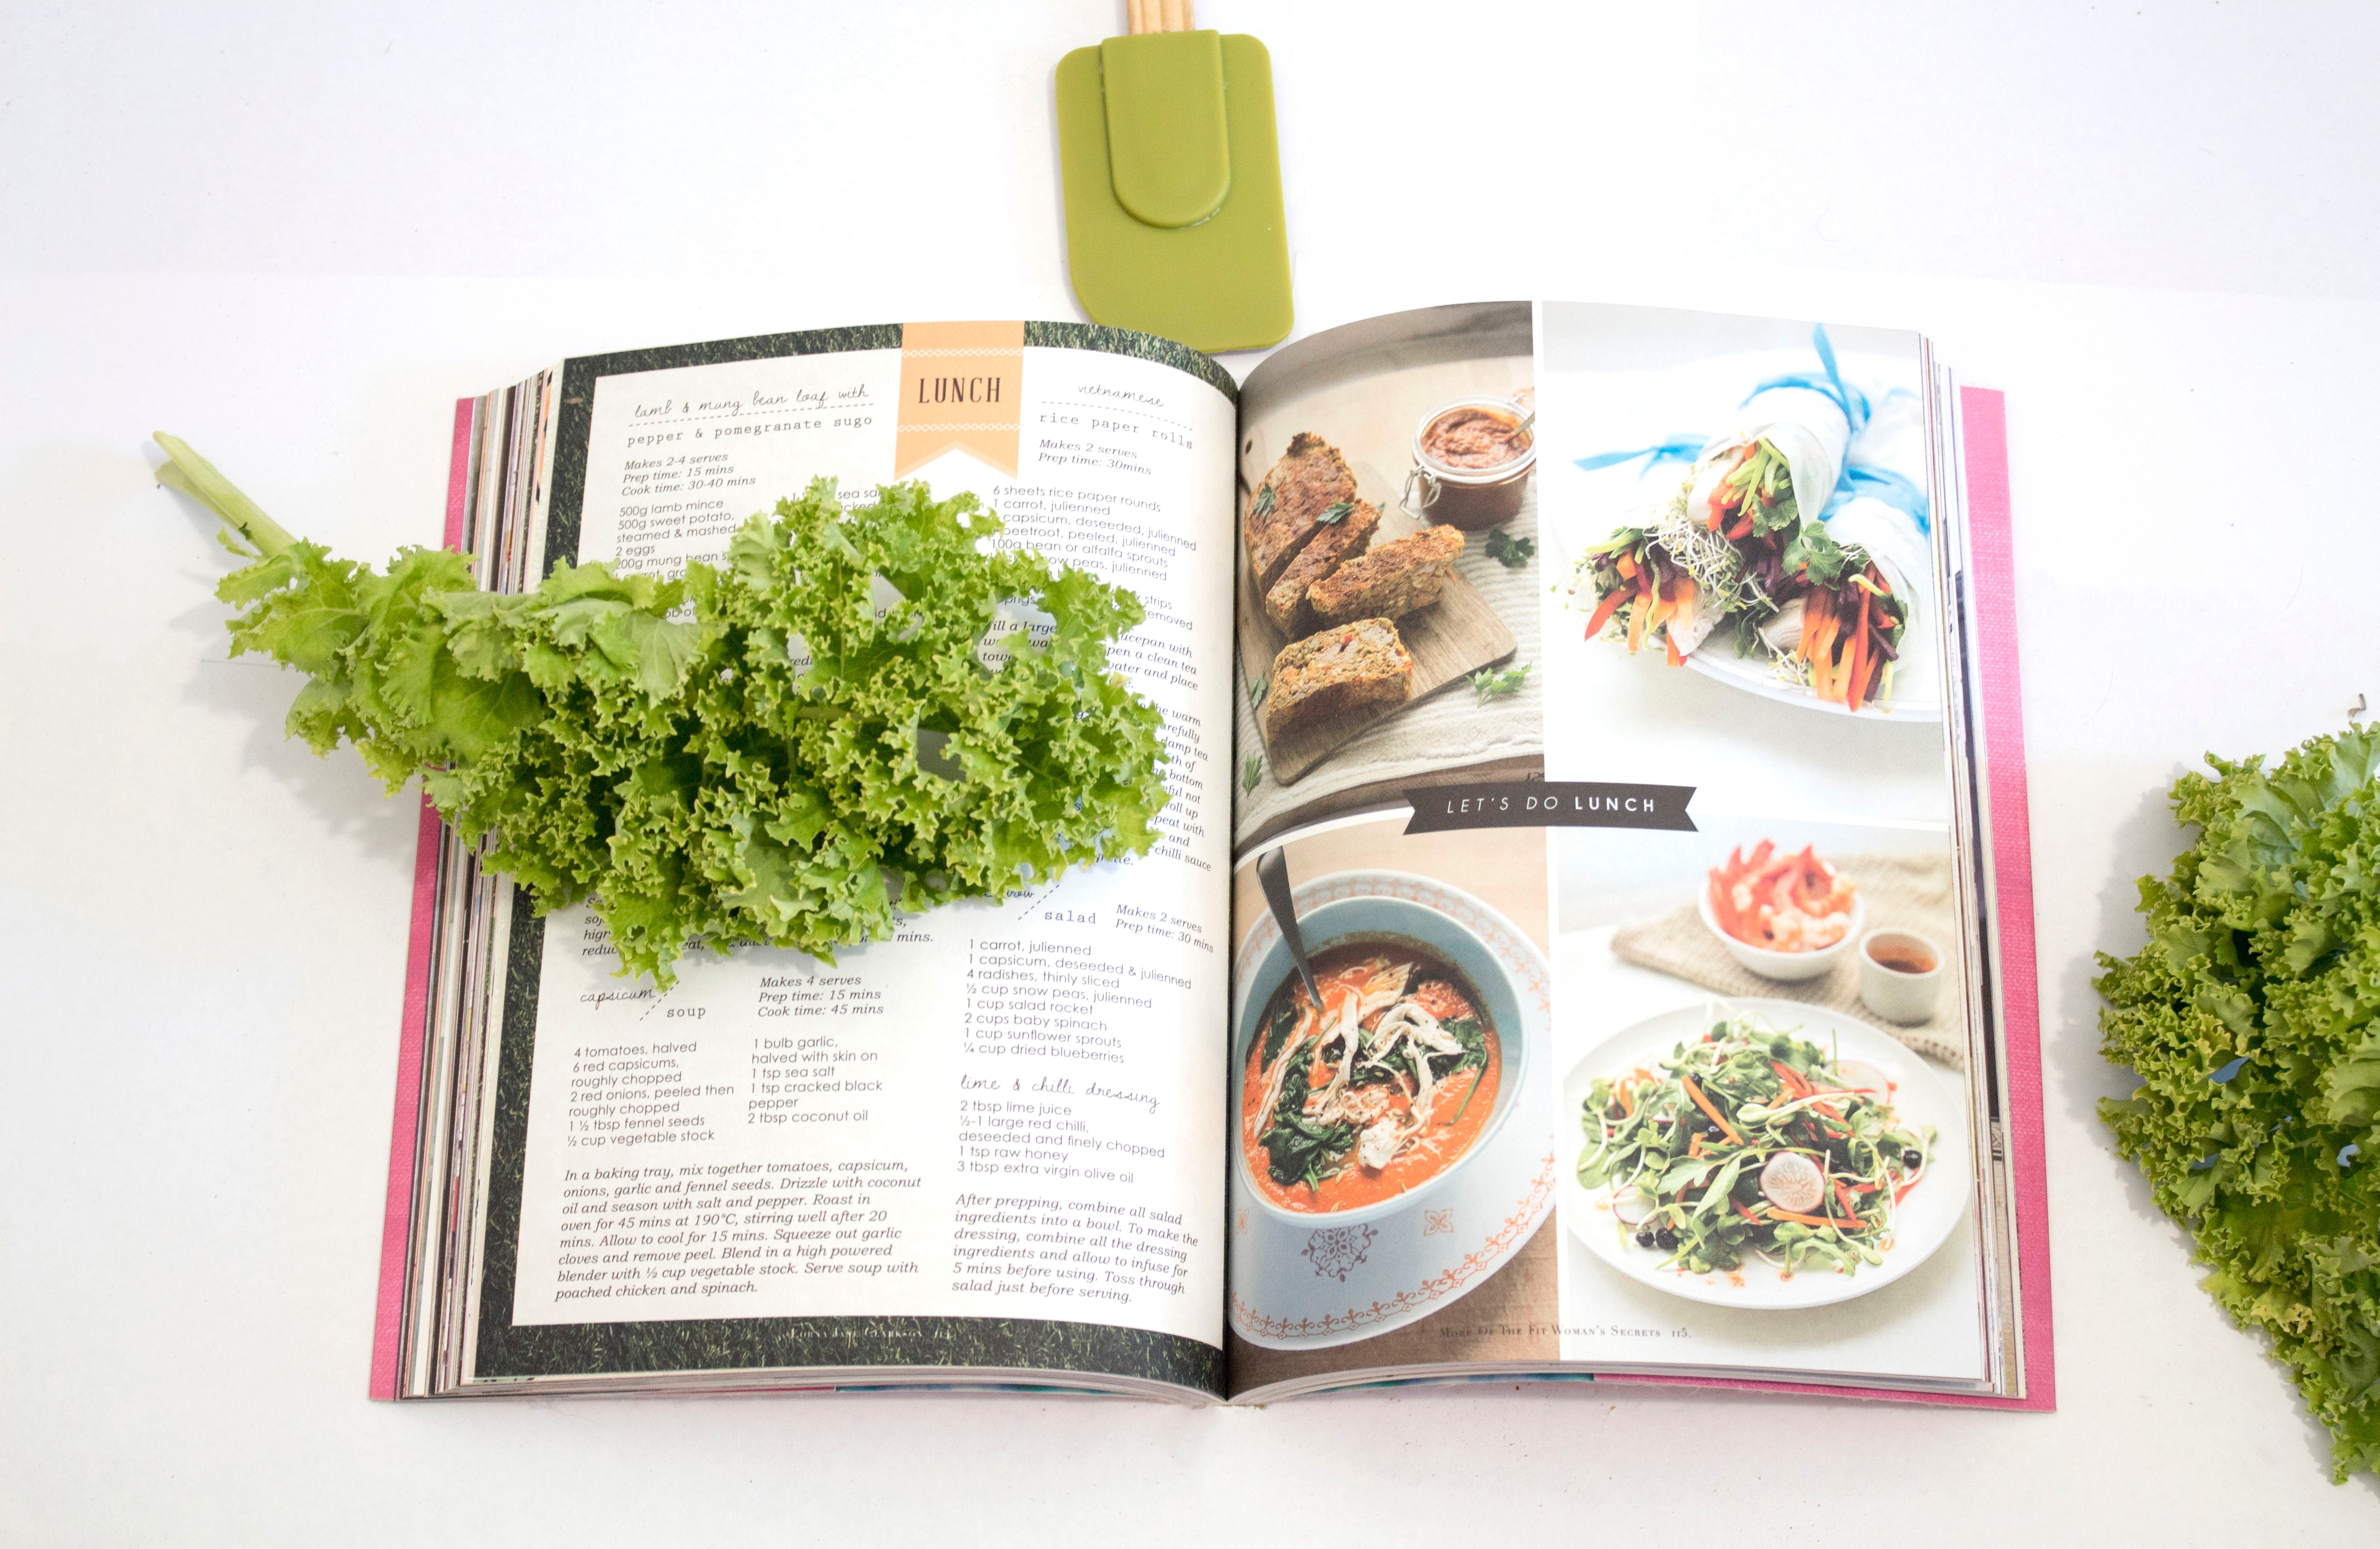 cookbook, kale, and spatula on table